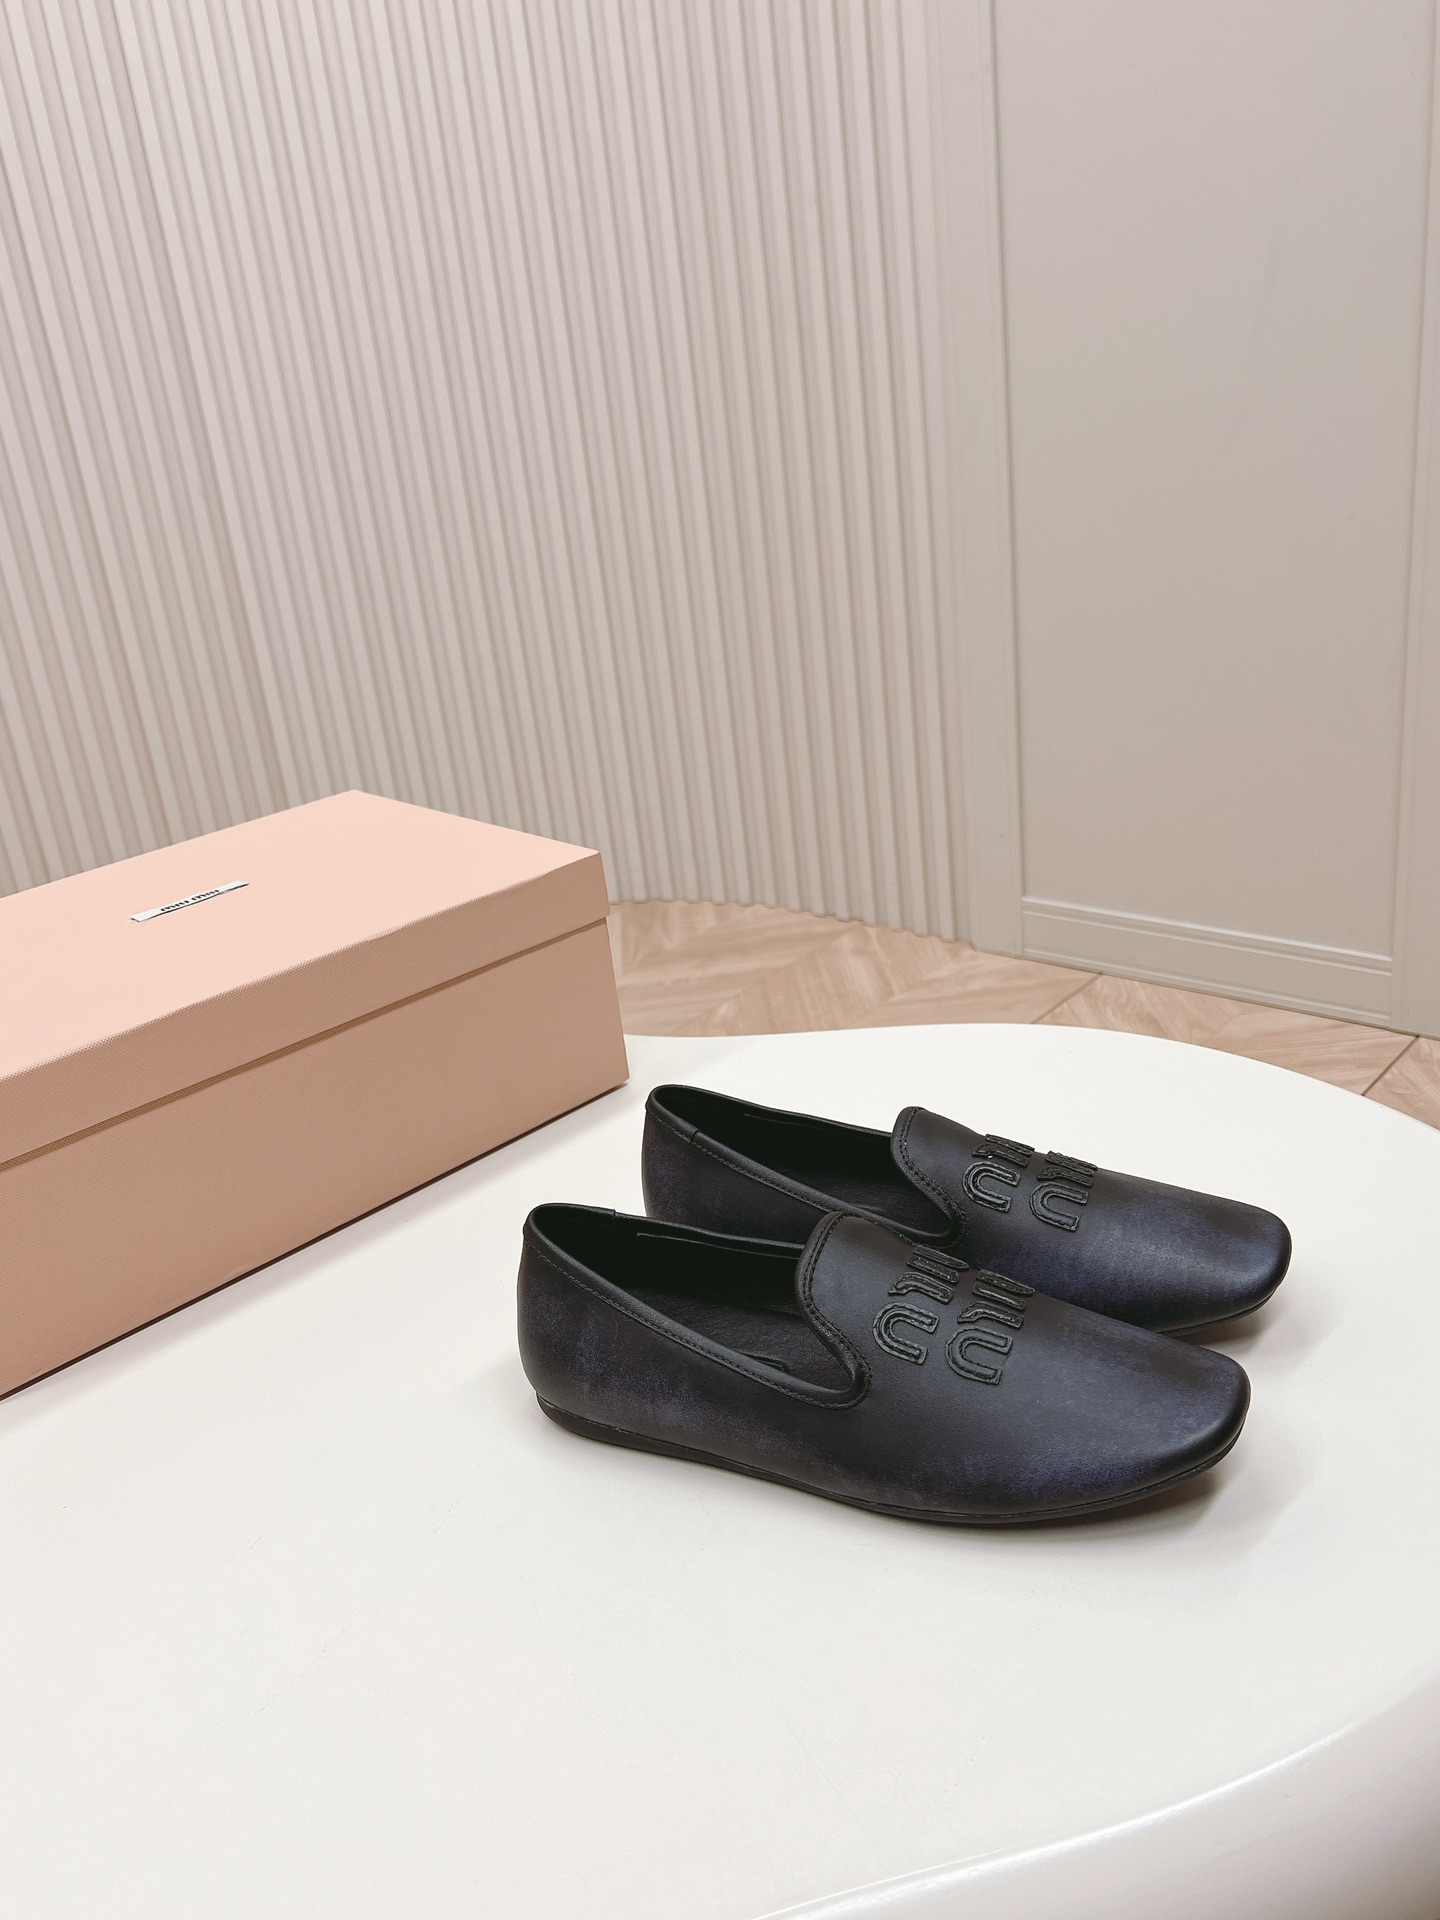 HOT100%新品miumiu 革靴スーパーコピー スクエアトゥデザイン トレンド感_2